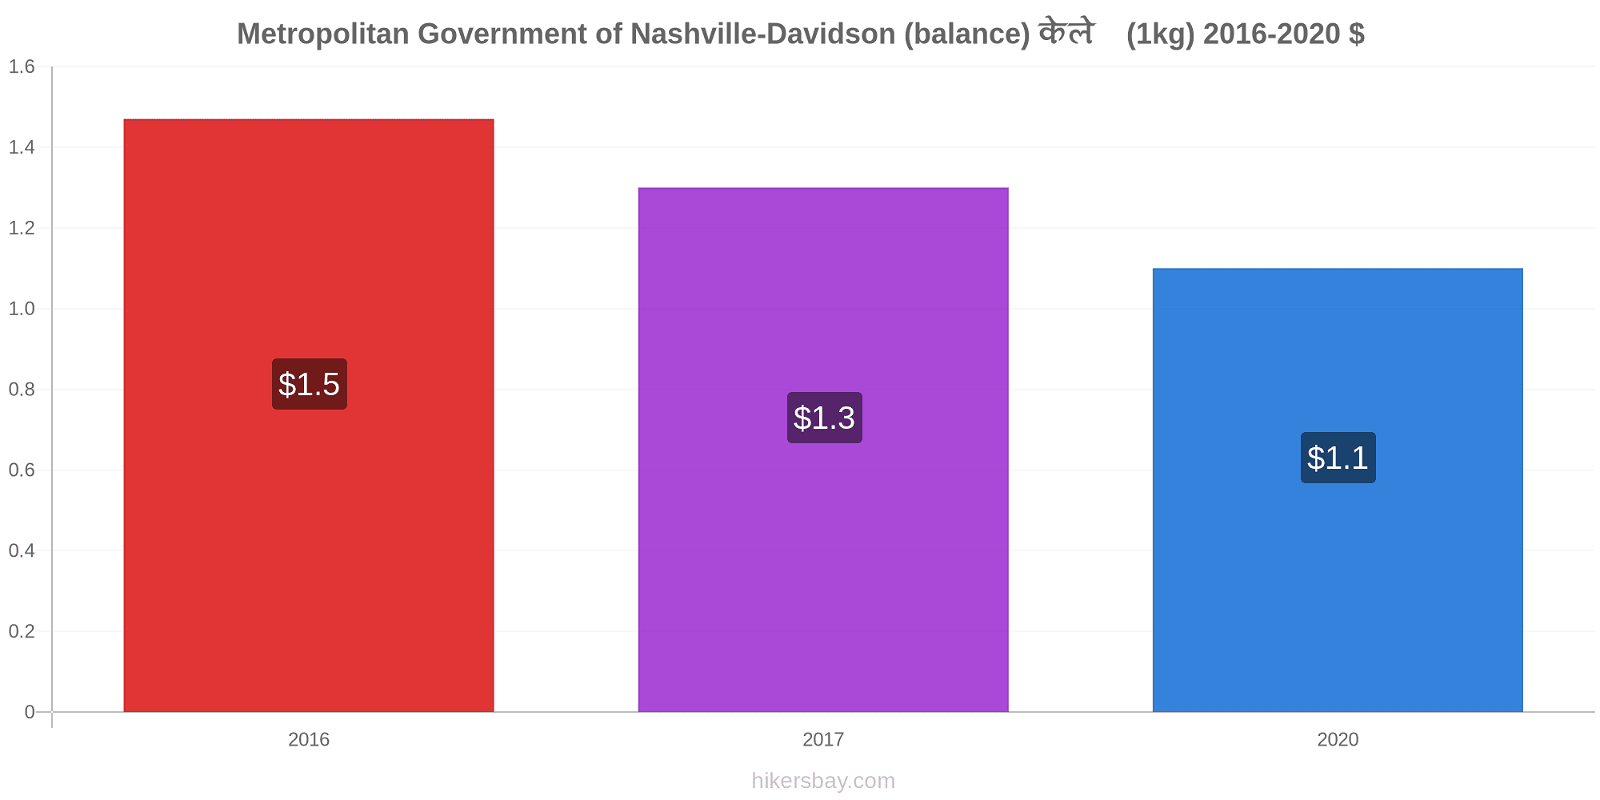 Metropolitan Government of Nashville-Davidson (balance) मूल्य परिवर्तन केले (1kg) hikersbay.com